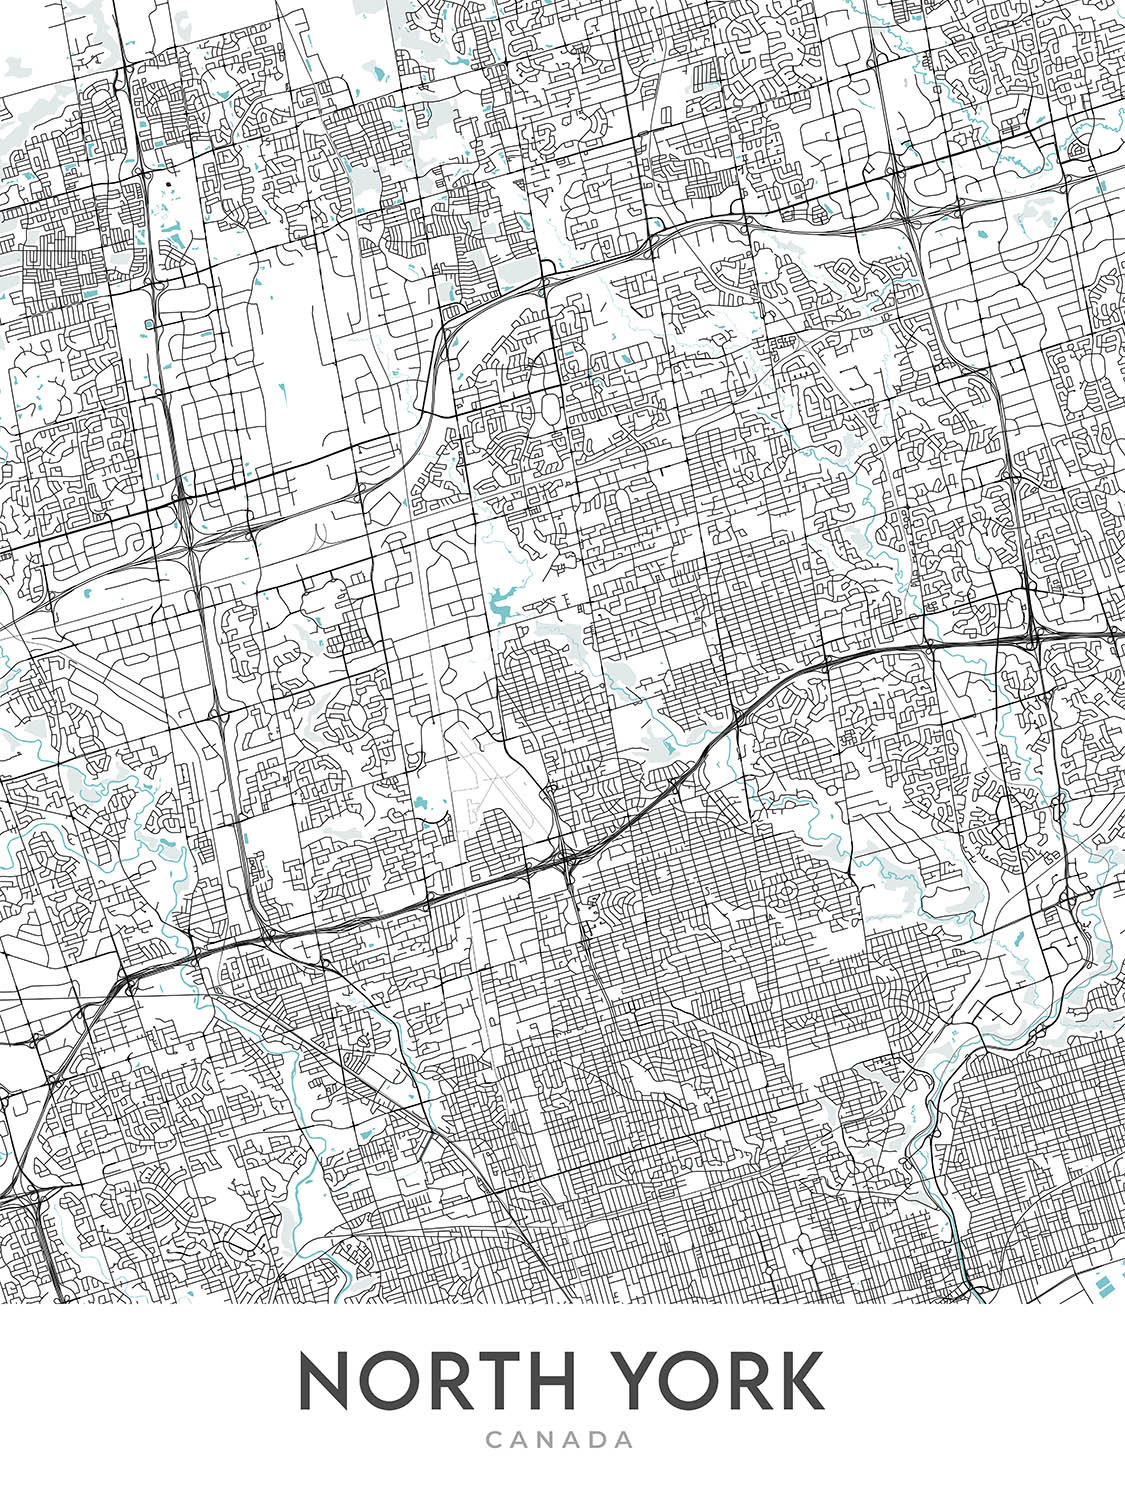 Moderner Stadtplan von North York, Kanada: Don Mills, Casa Loma, Hwy 401, Yonge St, North York Civic Center